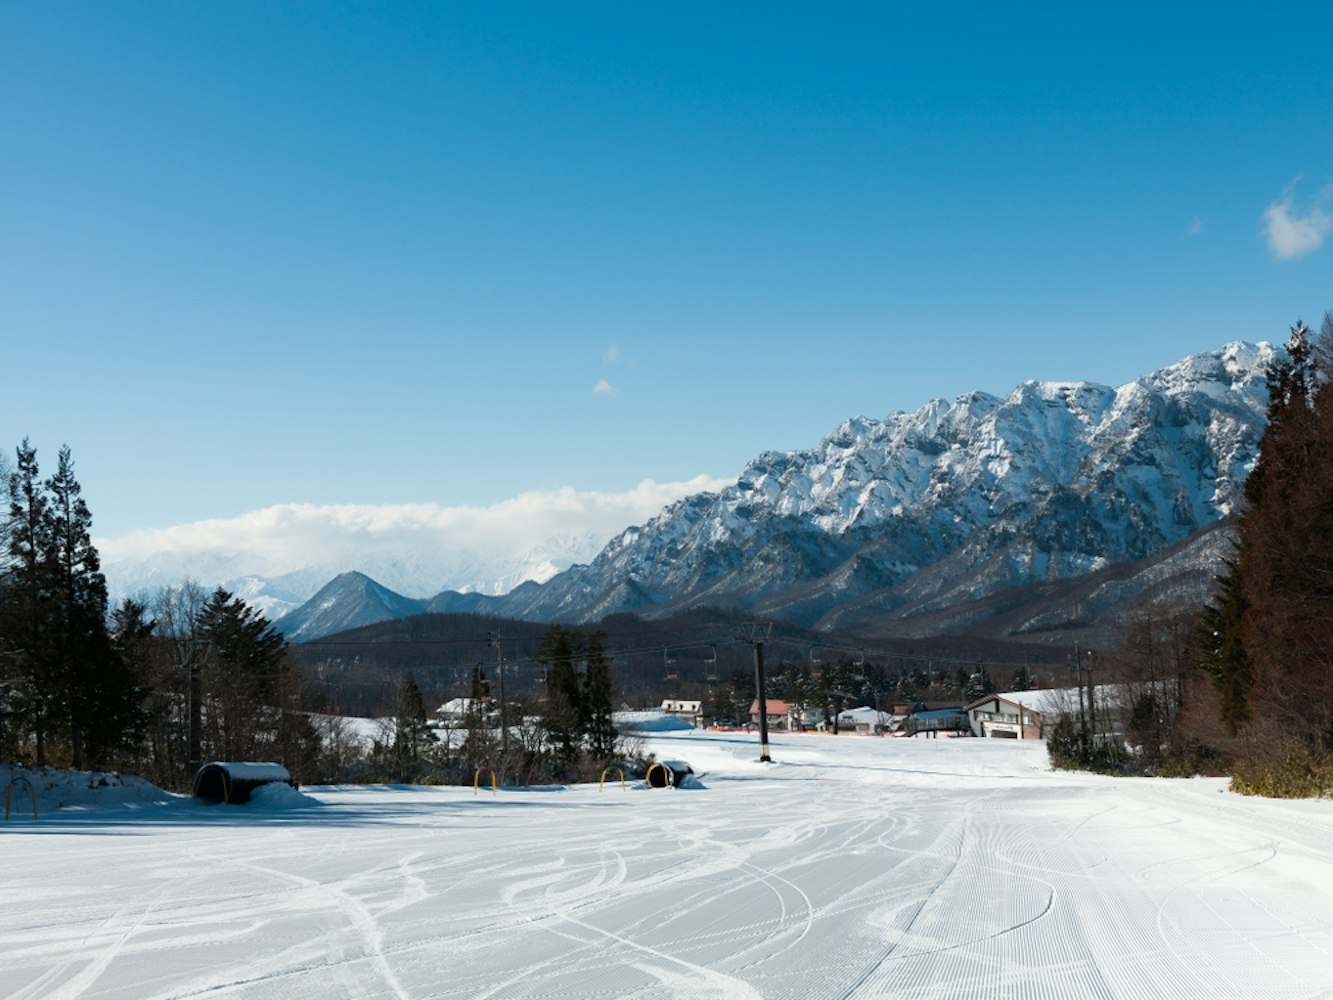 Skiing at Togakushi Ski Resort